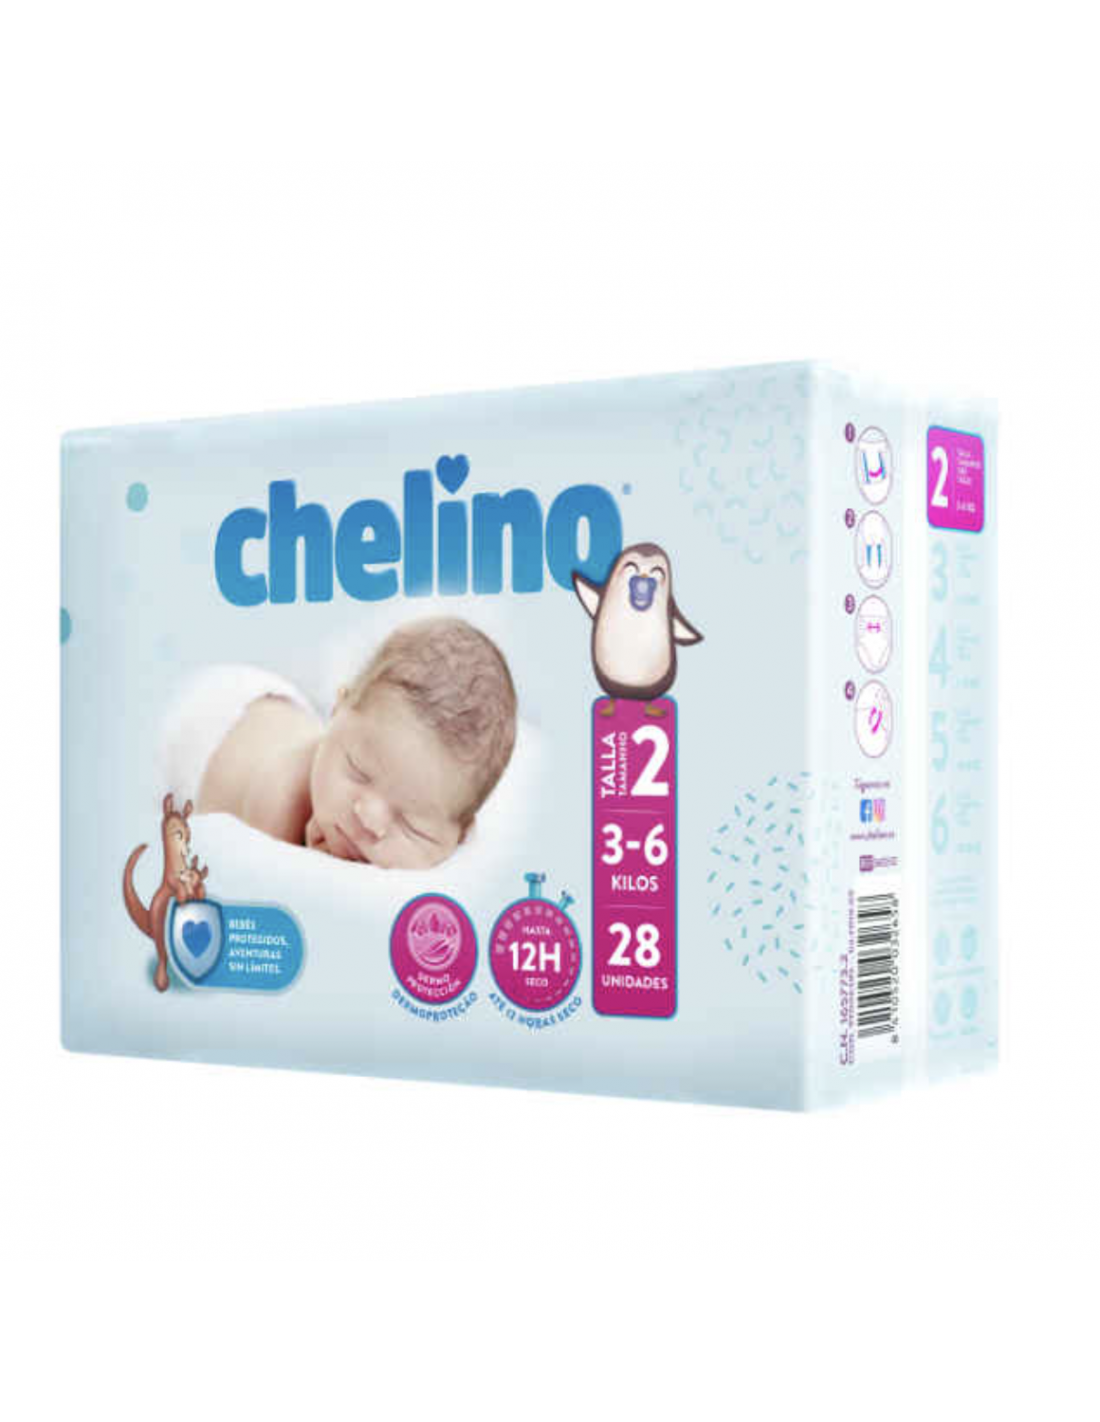 Chelino Pañales infantiles Talla 5 (13-18kg), 30 Unidades